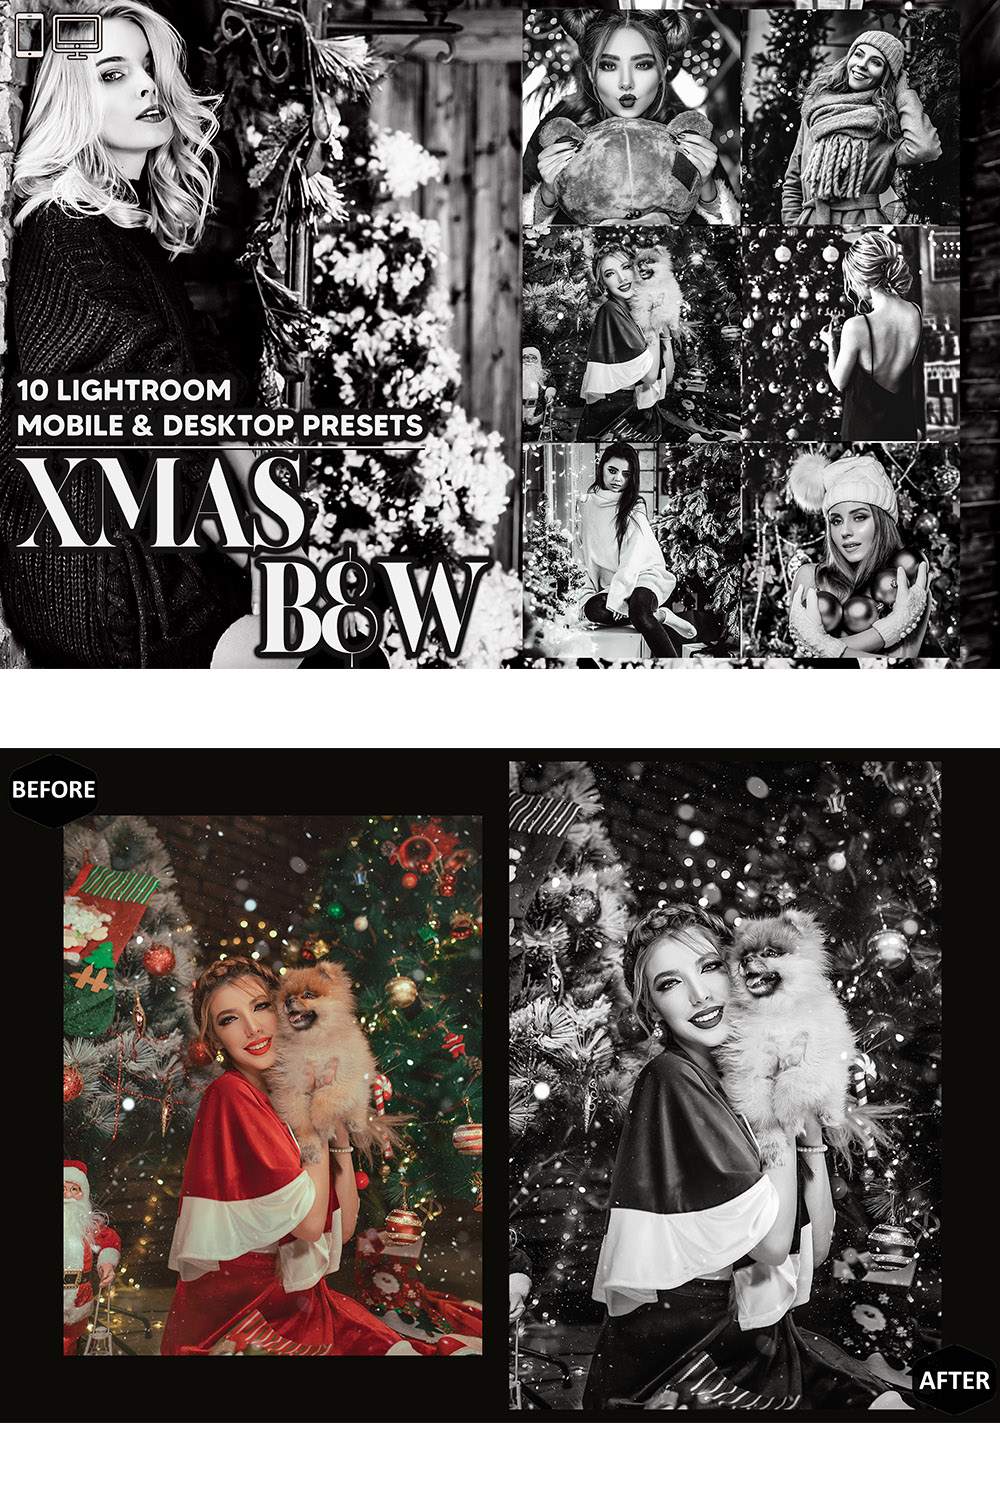 10 Xmas B&W Lightroom Presets, Black & White Christmas Mobile Preset, Winter Desktop, Lifestyle Portrait Theme For Instagram LR Filter DNG pinterest preview image.